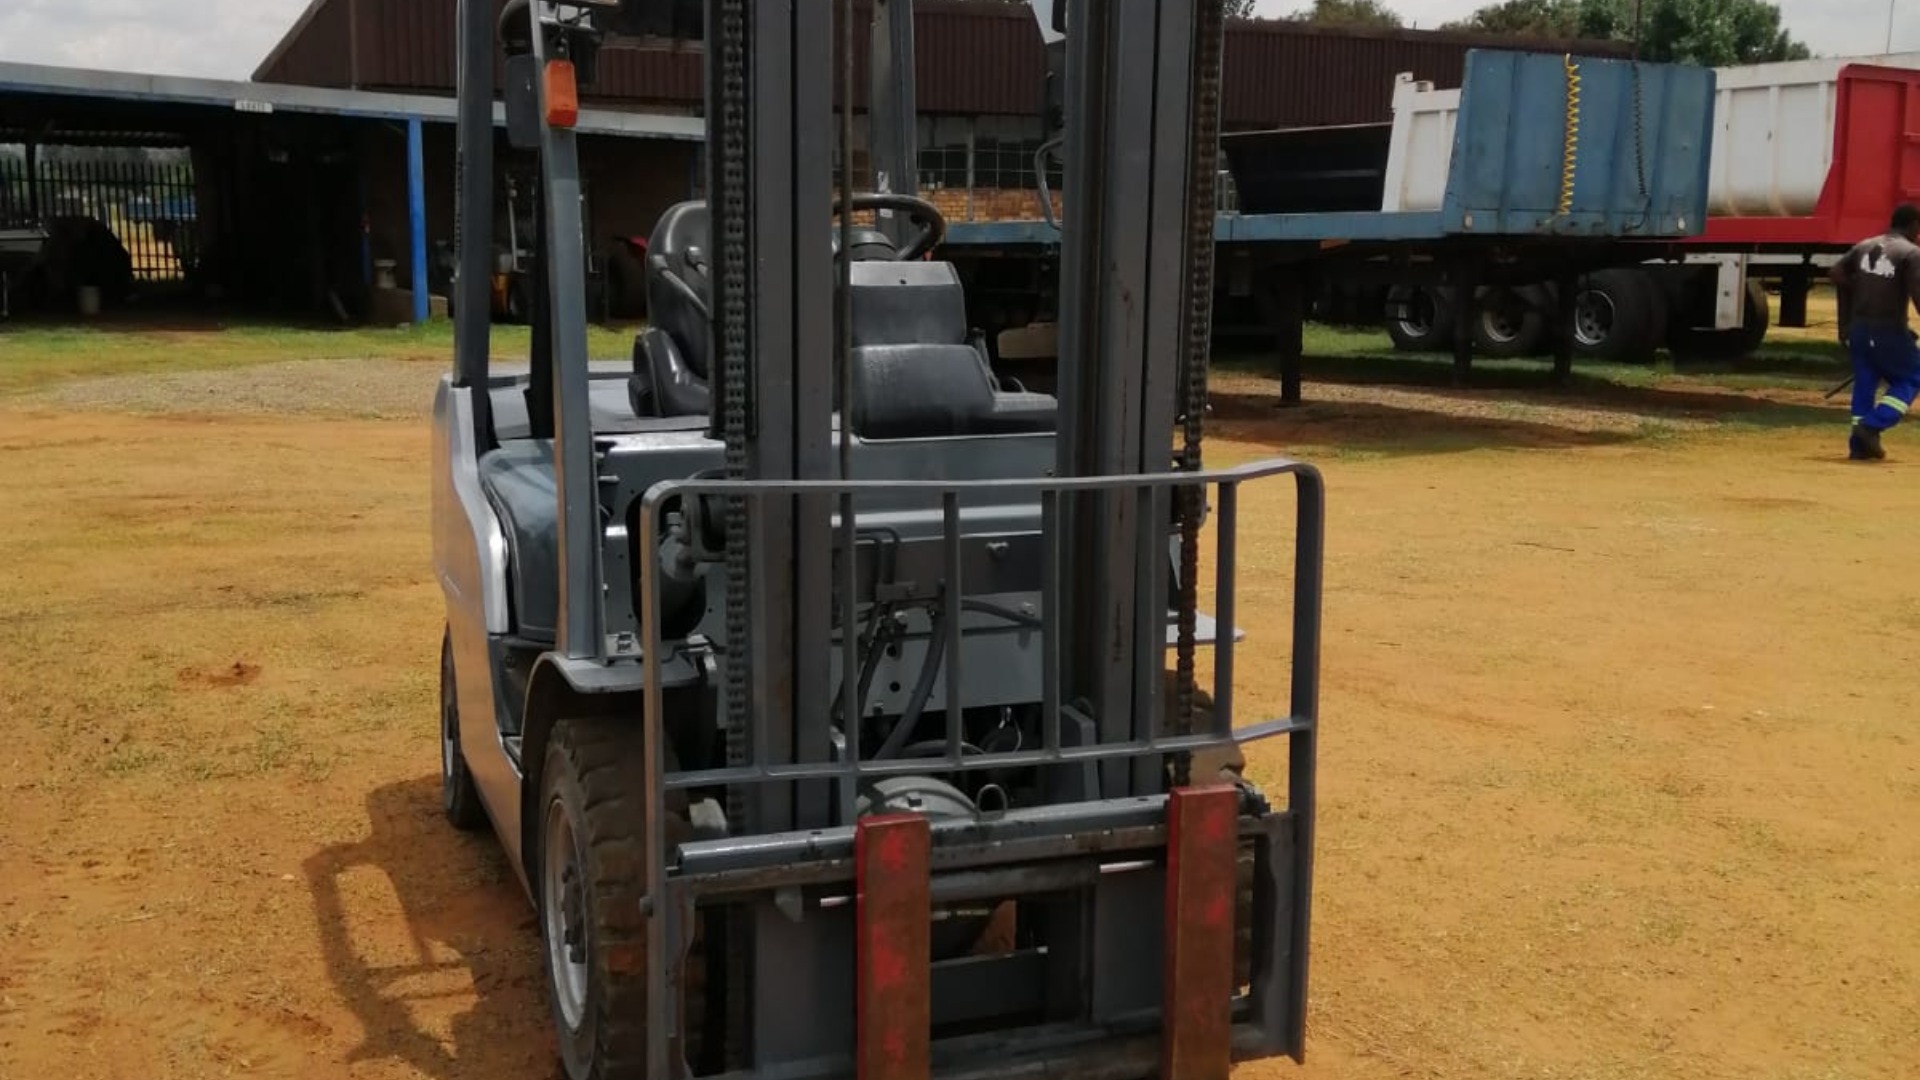 2015 Nissan 2 5t Side Shift Diesel Forklift Forklifts Machinery For Sale In Gauteng R 249 000 On Truck Trailer